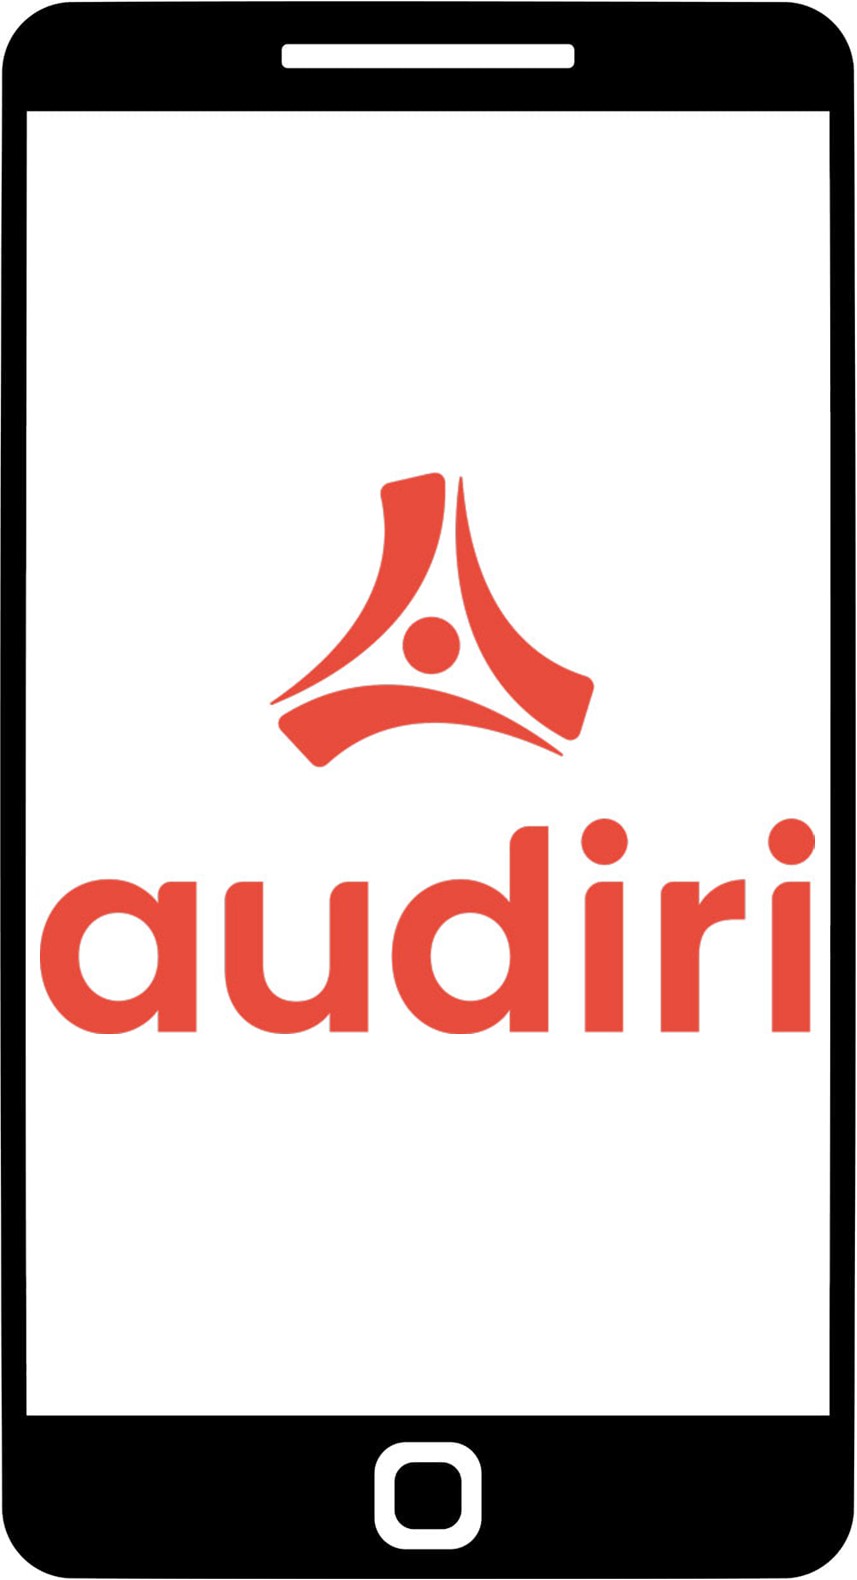 Audiri mobile app on a screen.